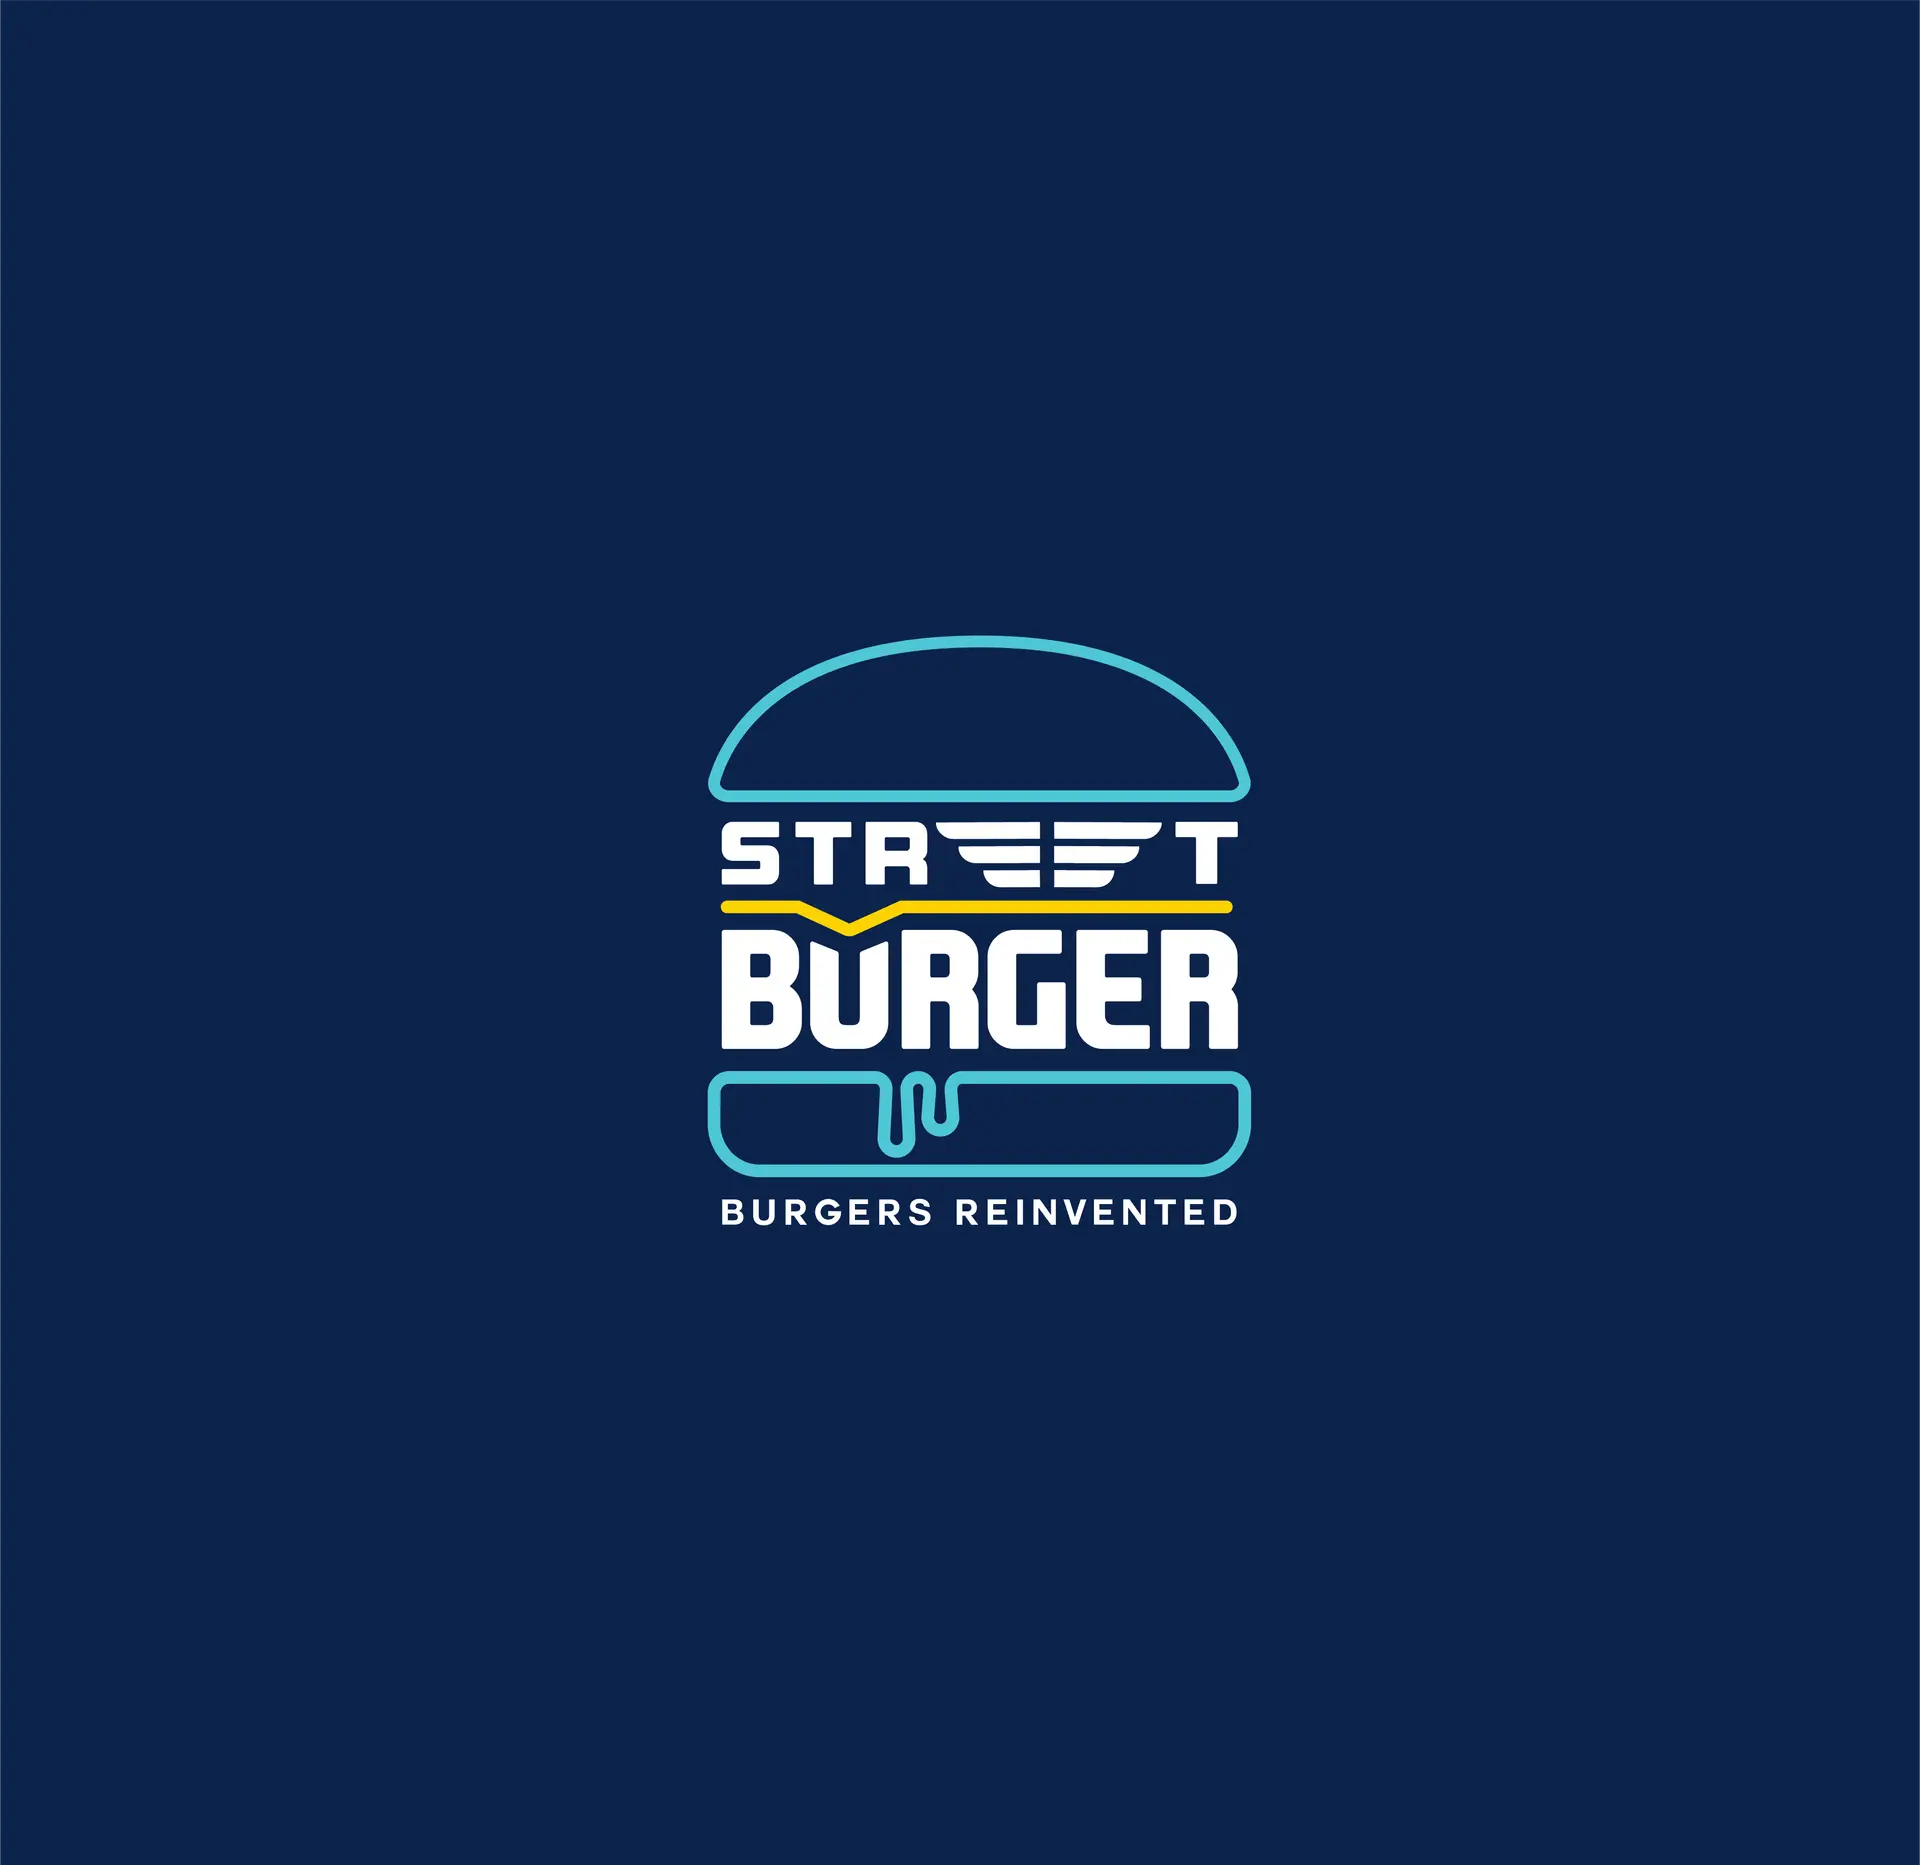 Street Burger - New Logo